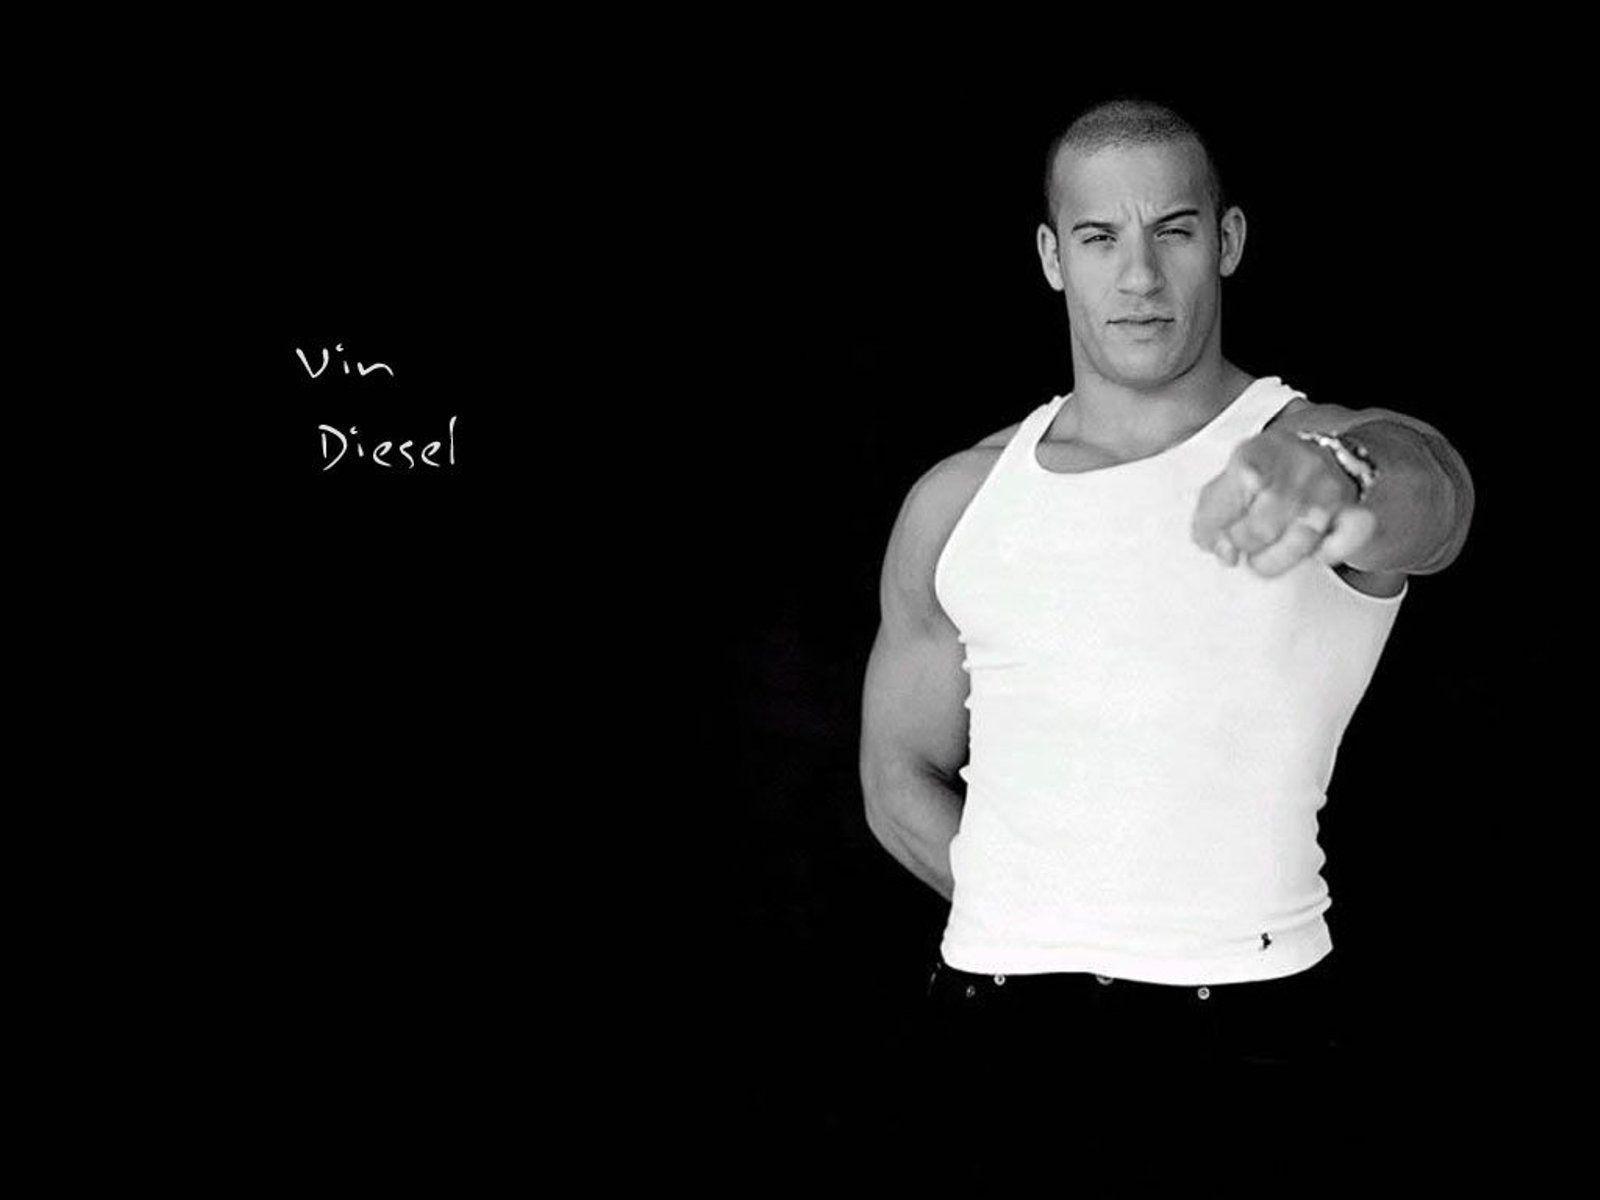 Vin Diesel Image Free Download. Free Desk Wallpaper